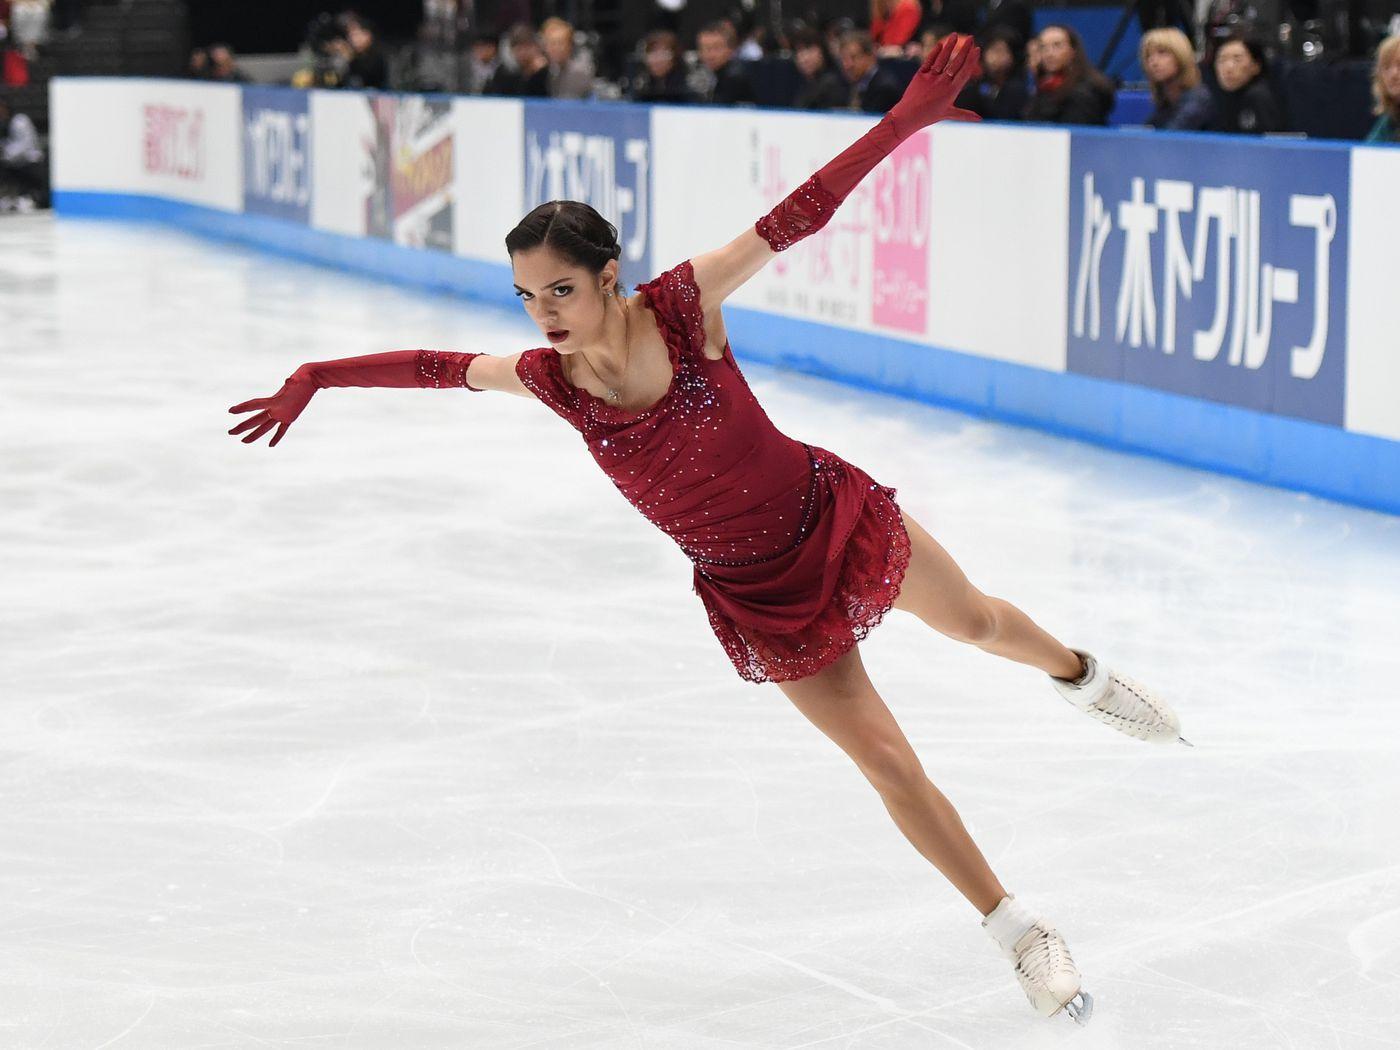 Winter Olympics figure skating: Evgenia Medvedeva is talented